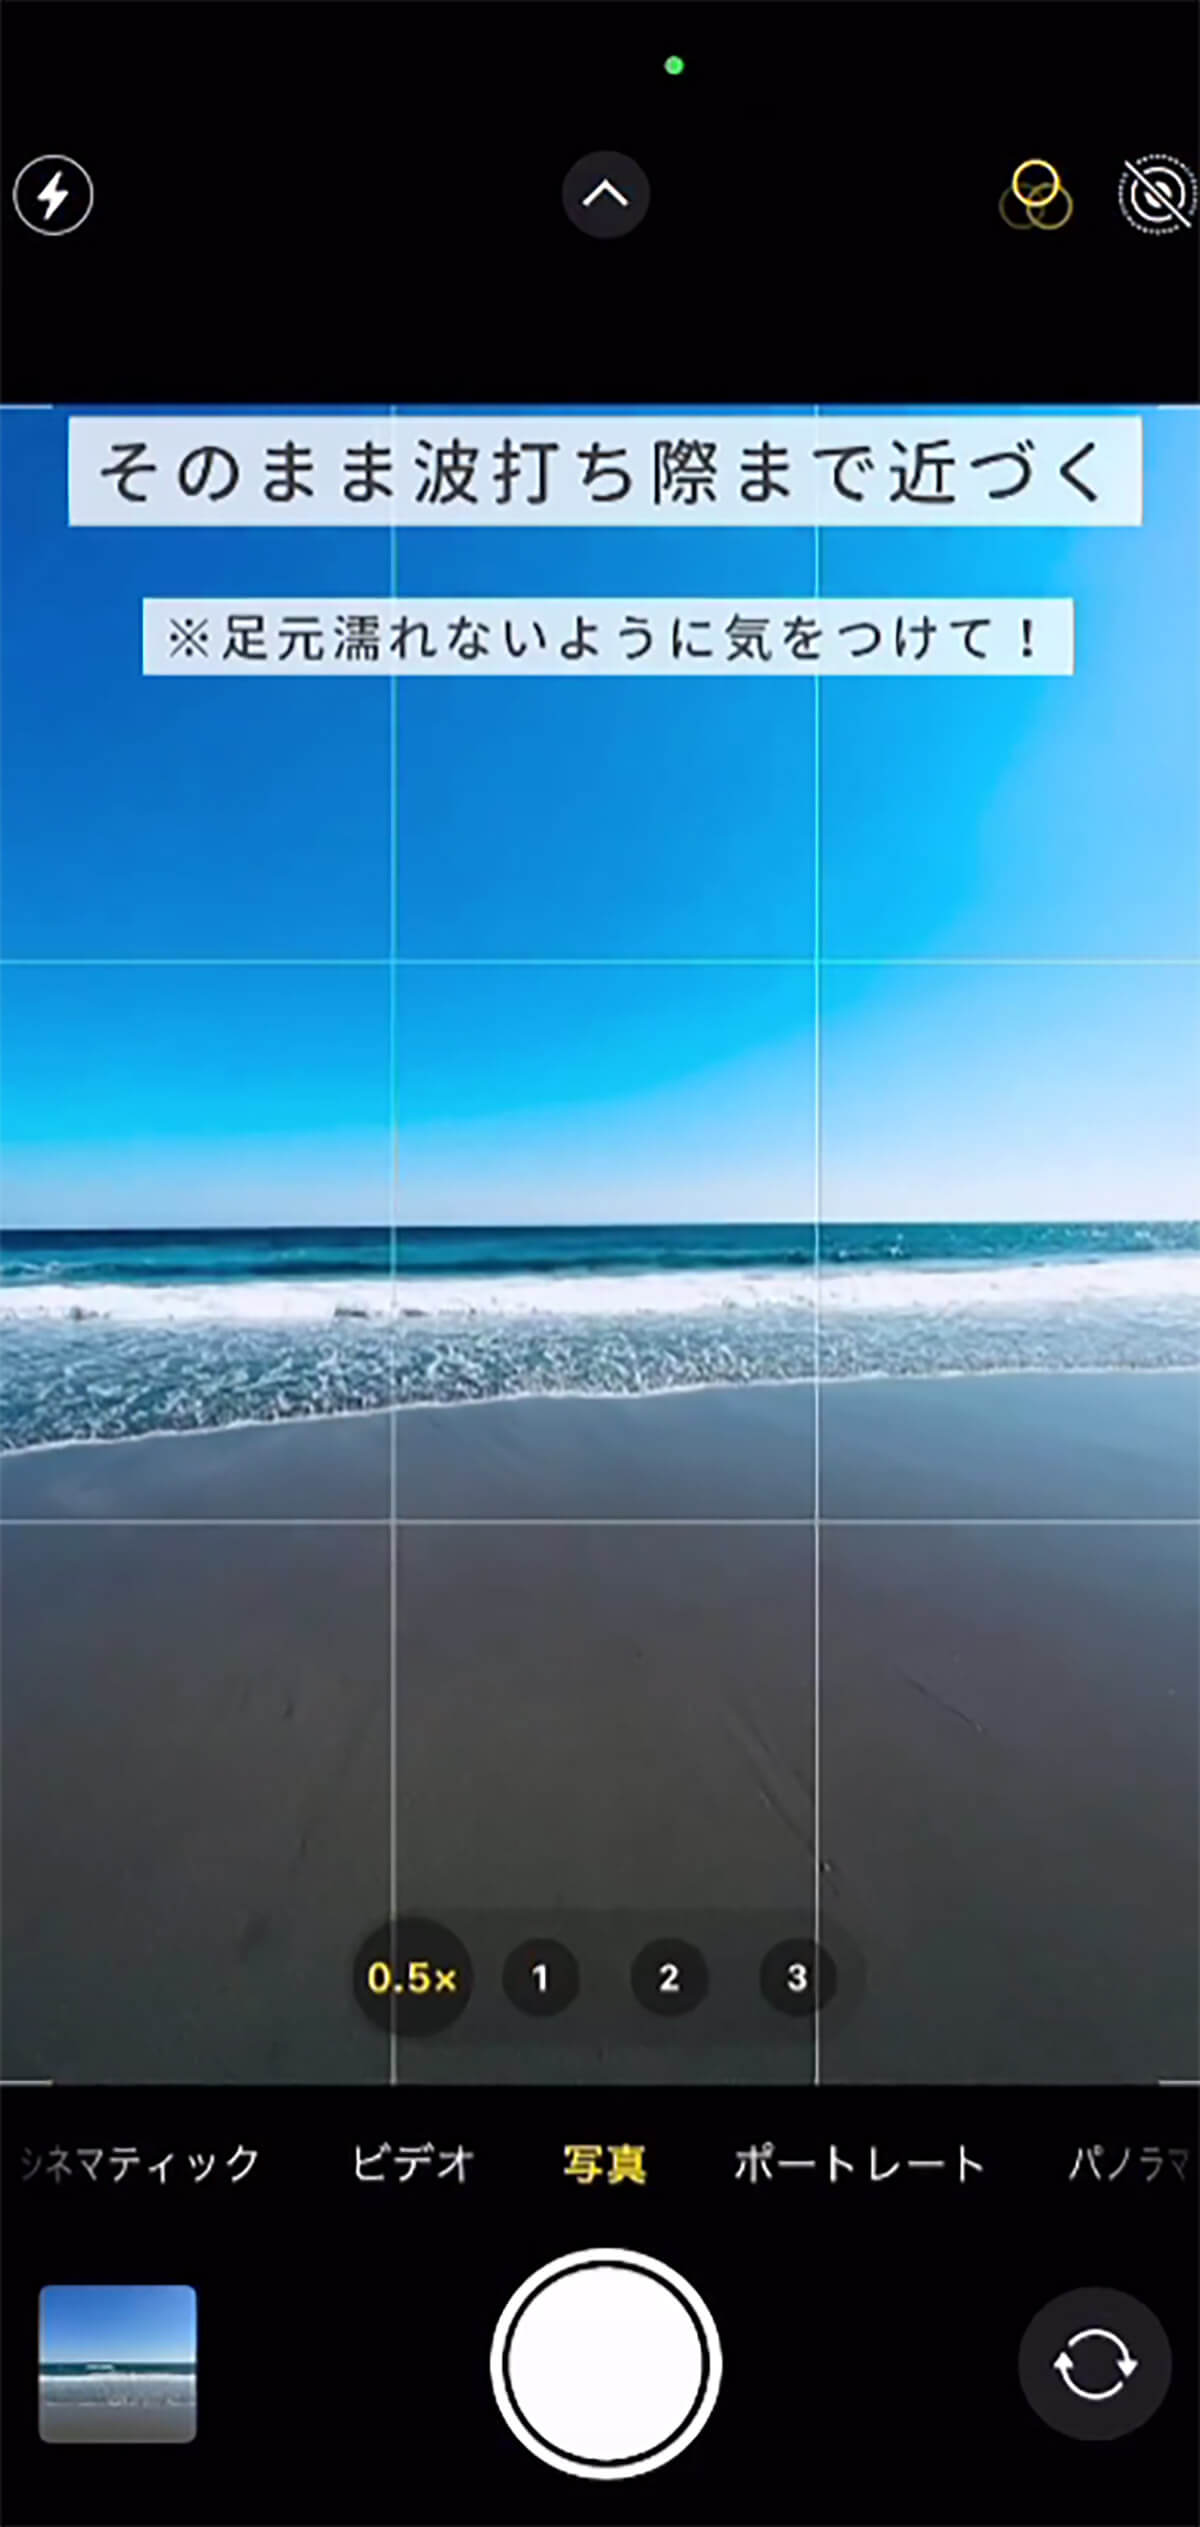 iPhoneで海の写真をダイナミックに撮影する方法3